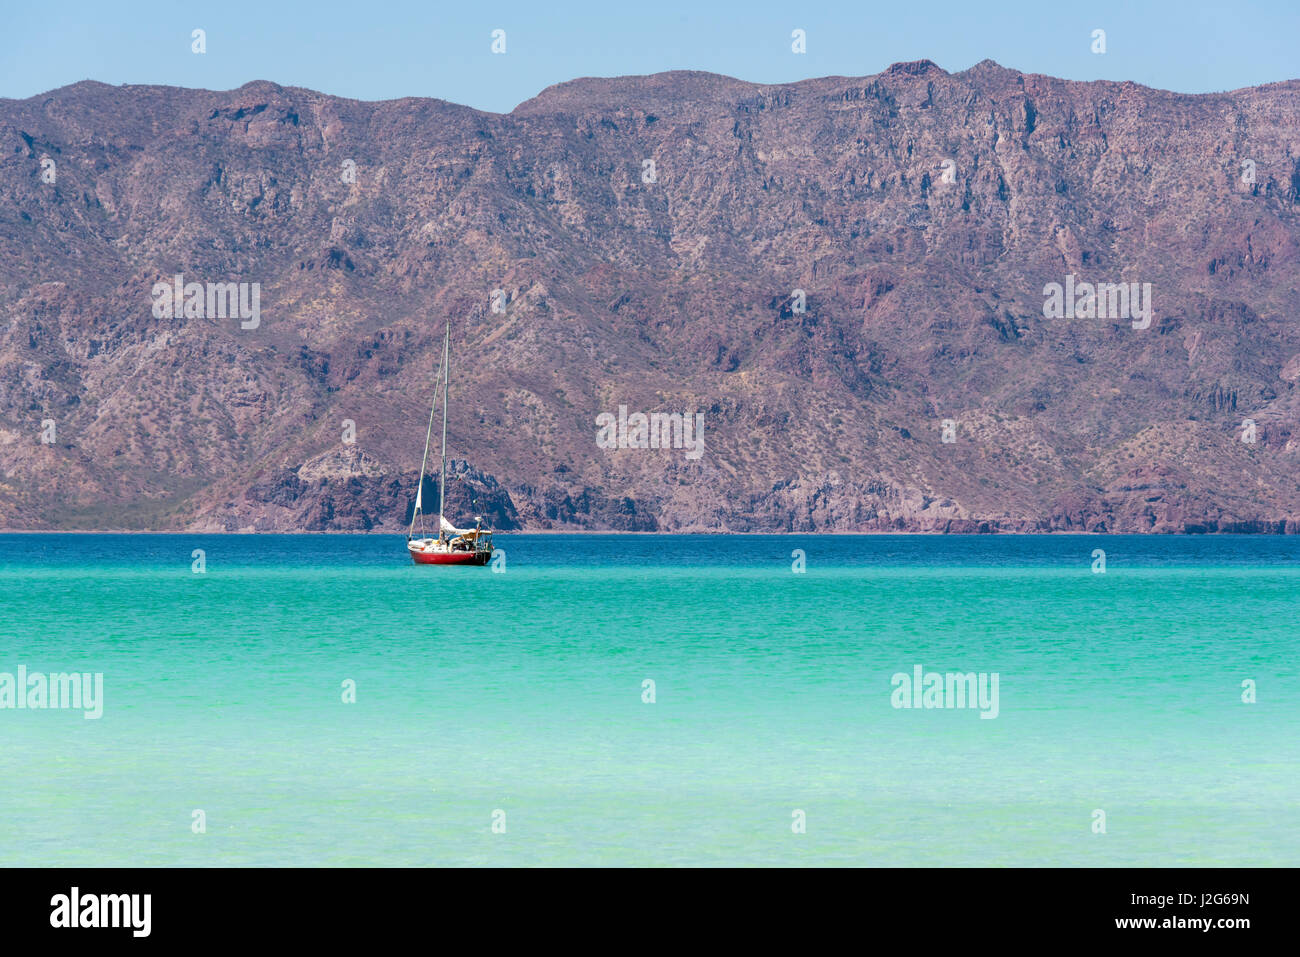 Mexico, Baja California Sur, Sea of Cortez, Loreto Bay. Lone sailboat on flat calm water with Sierra de la Giganta beyond Stock Photo